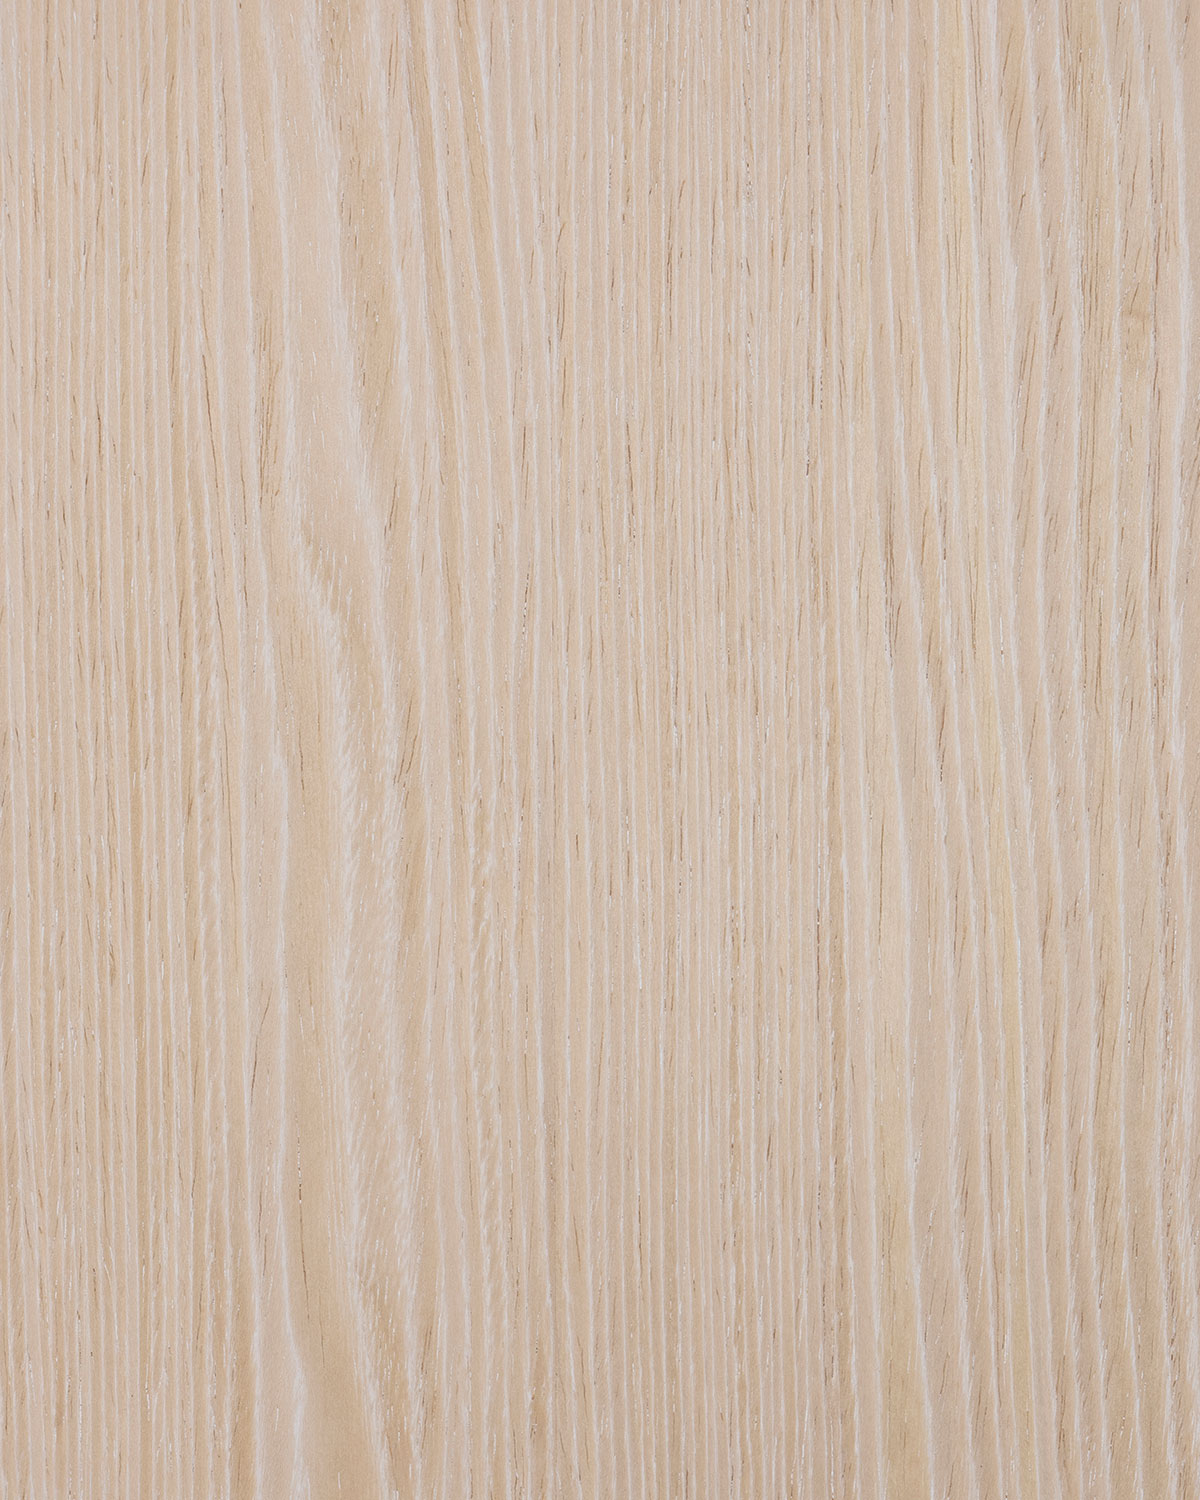 Recon Frosted Oak Plank